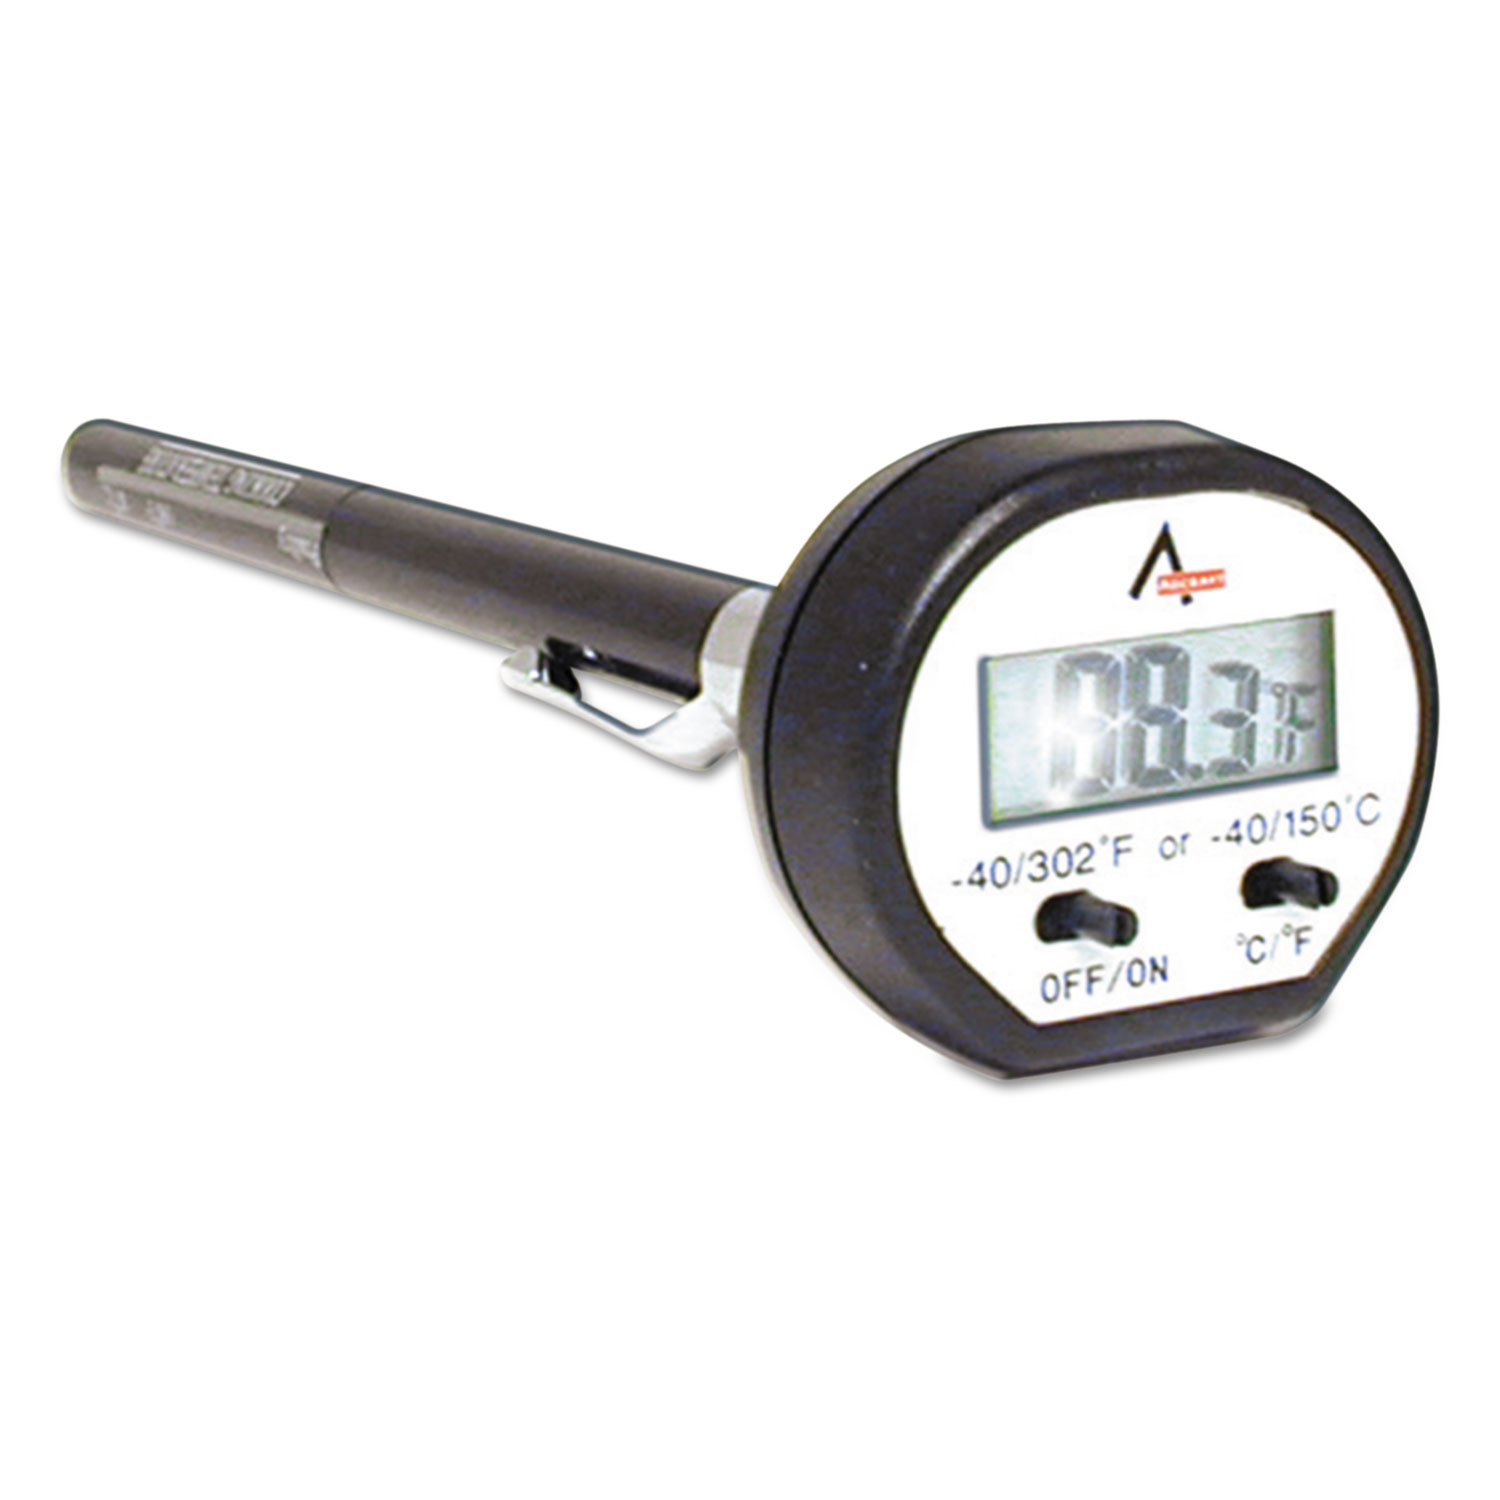 Digital Pocket Thermometer, 302°F/150°C